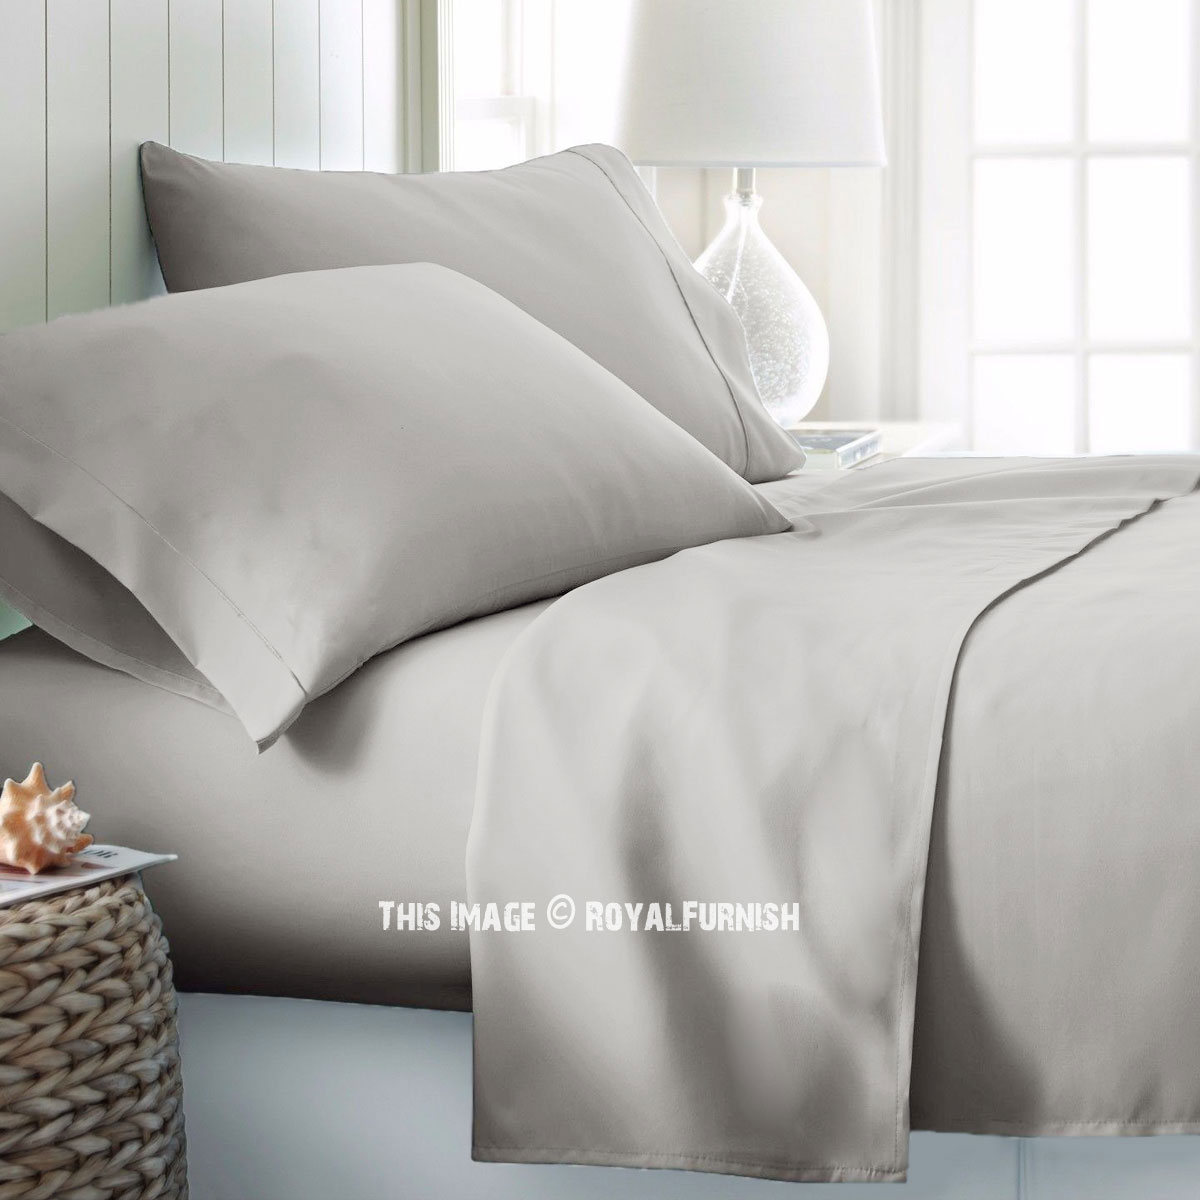 Light Grey 4pc Cotton Bed Sheet Set 1, Light Grey King Size Bed Sheet Set